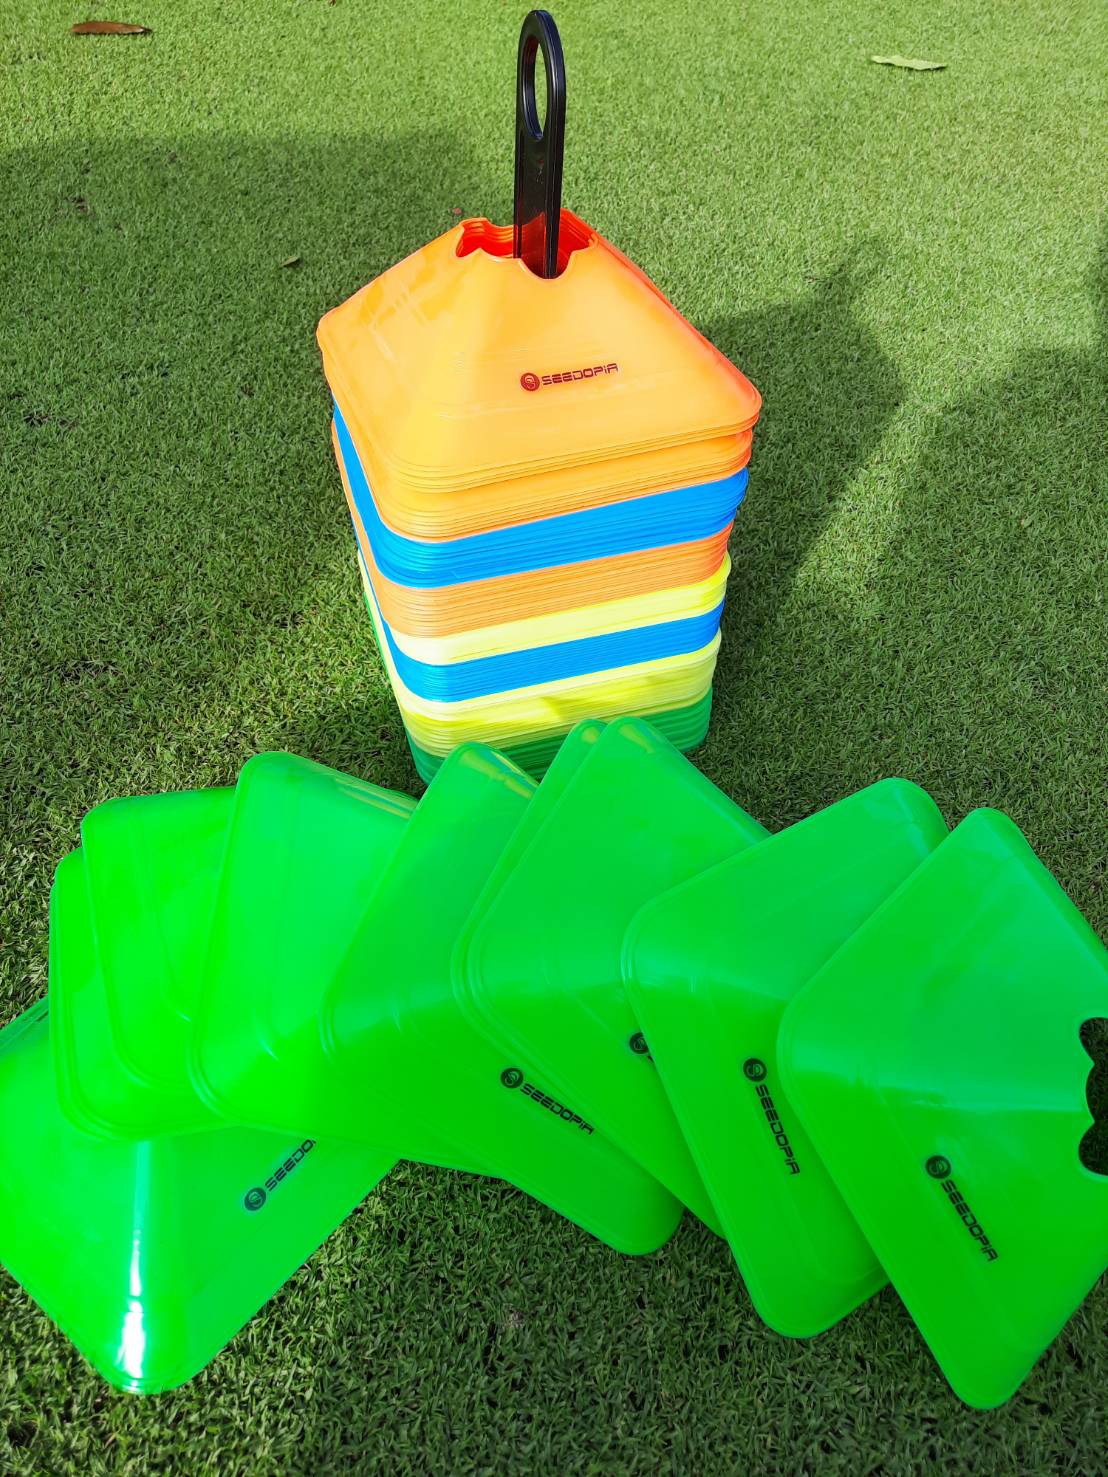 Seedopia Sport - มาร์กเกอร์โคน กรวยฝึกซ้อม กรวยซ้อมกีฬา ทีมเทรนเนอร์ดีสโคน ชุดละ 10 ชิ้น Sport Training Cone Square cone 10 pcs per color